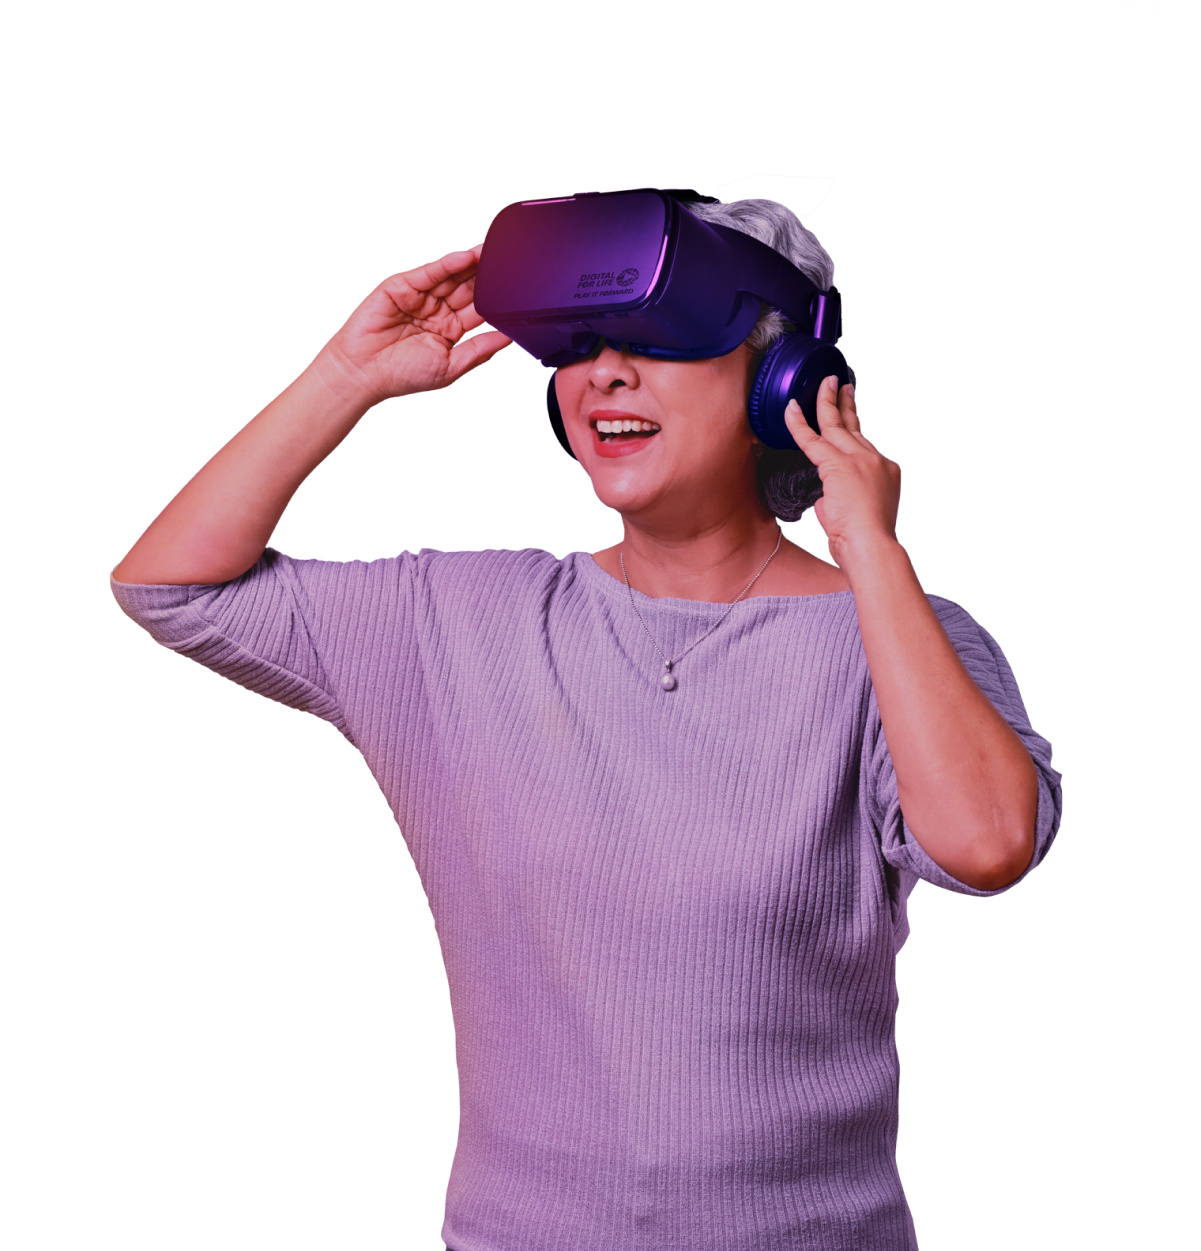 An elderly woman wearing a VR headset